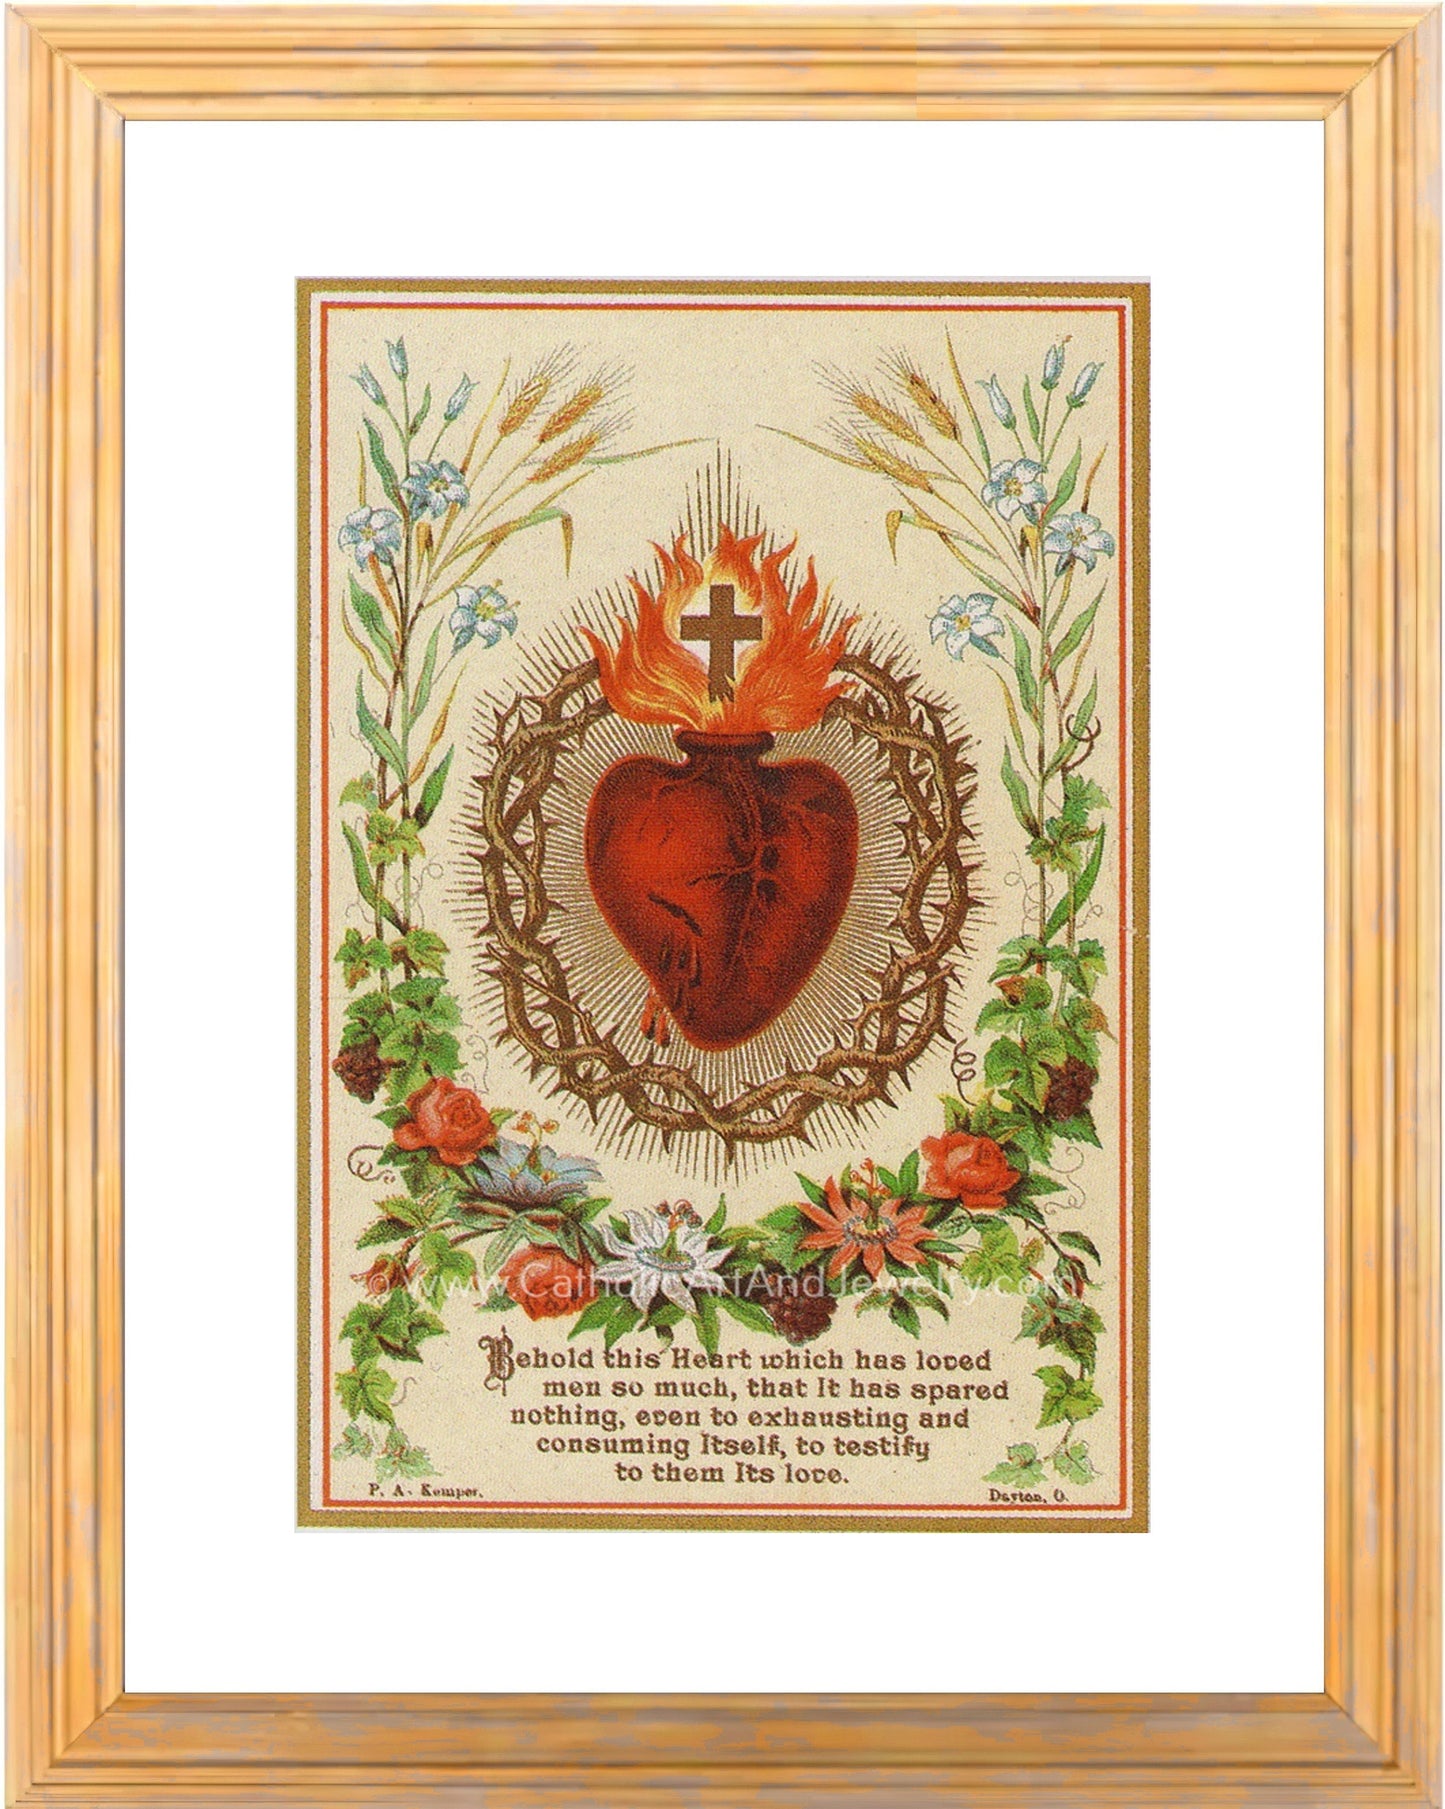 Sacred Heart of Jesus – based on a Vintage Holy Card – Catholic Art Print – Archival Quality